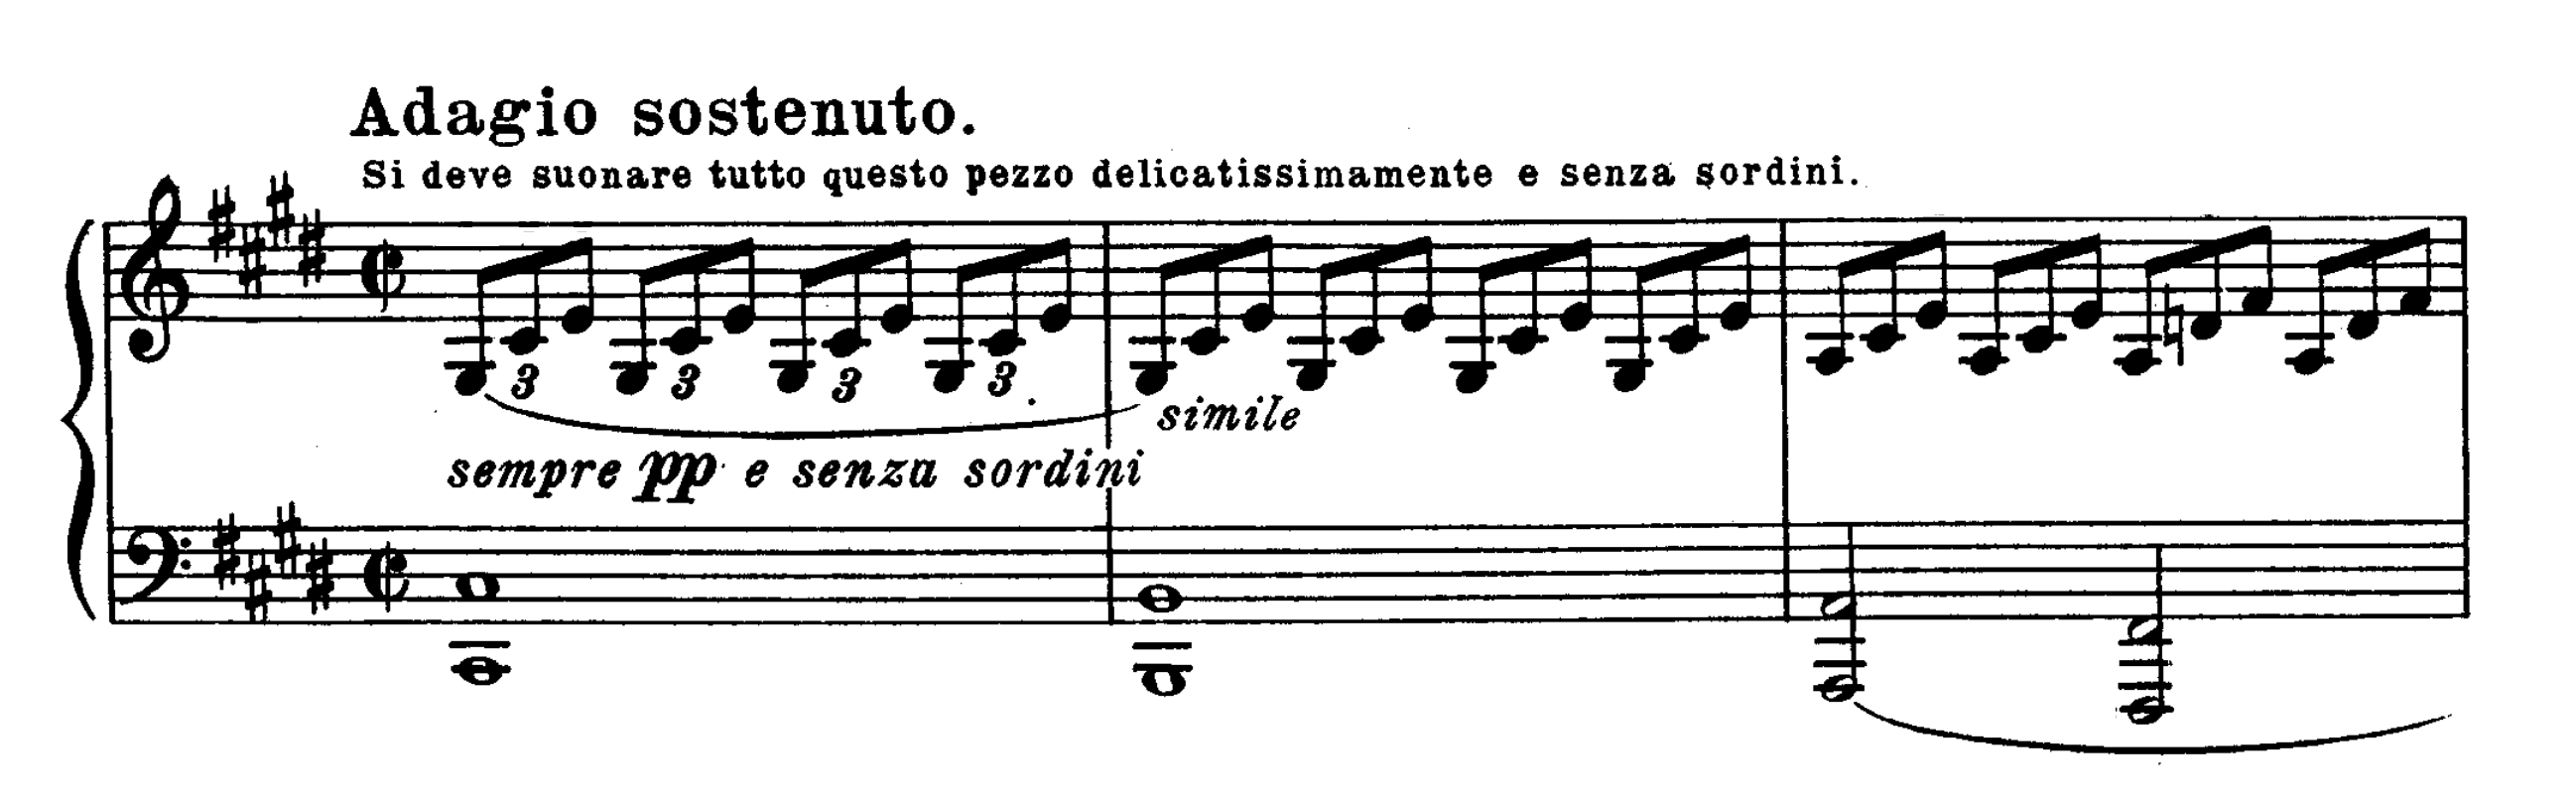 Бетховен. соната для фортепиано no. 14 («лунная») (piano sonata no. 14 (cis-moll), op. 27, no. 2, «moonlight») | belcanto.ru